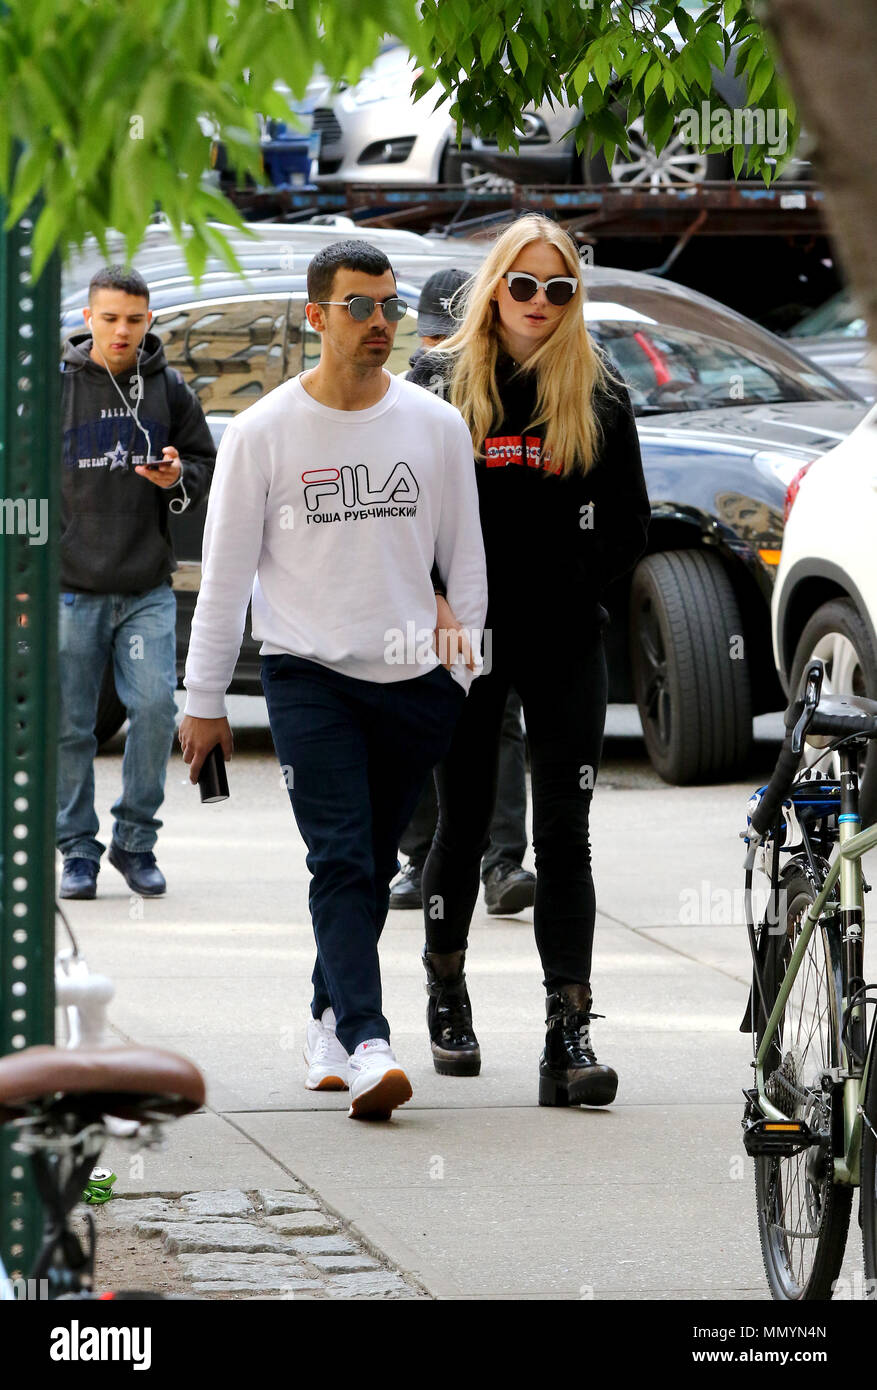 NEW YORK, NY - MAY 09: Singer Joe Jonas and his girlfriend actress